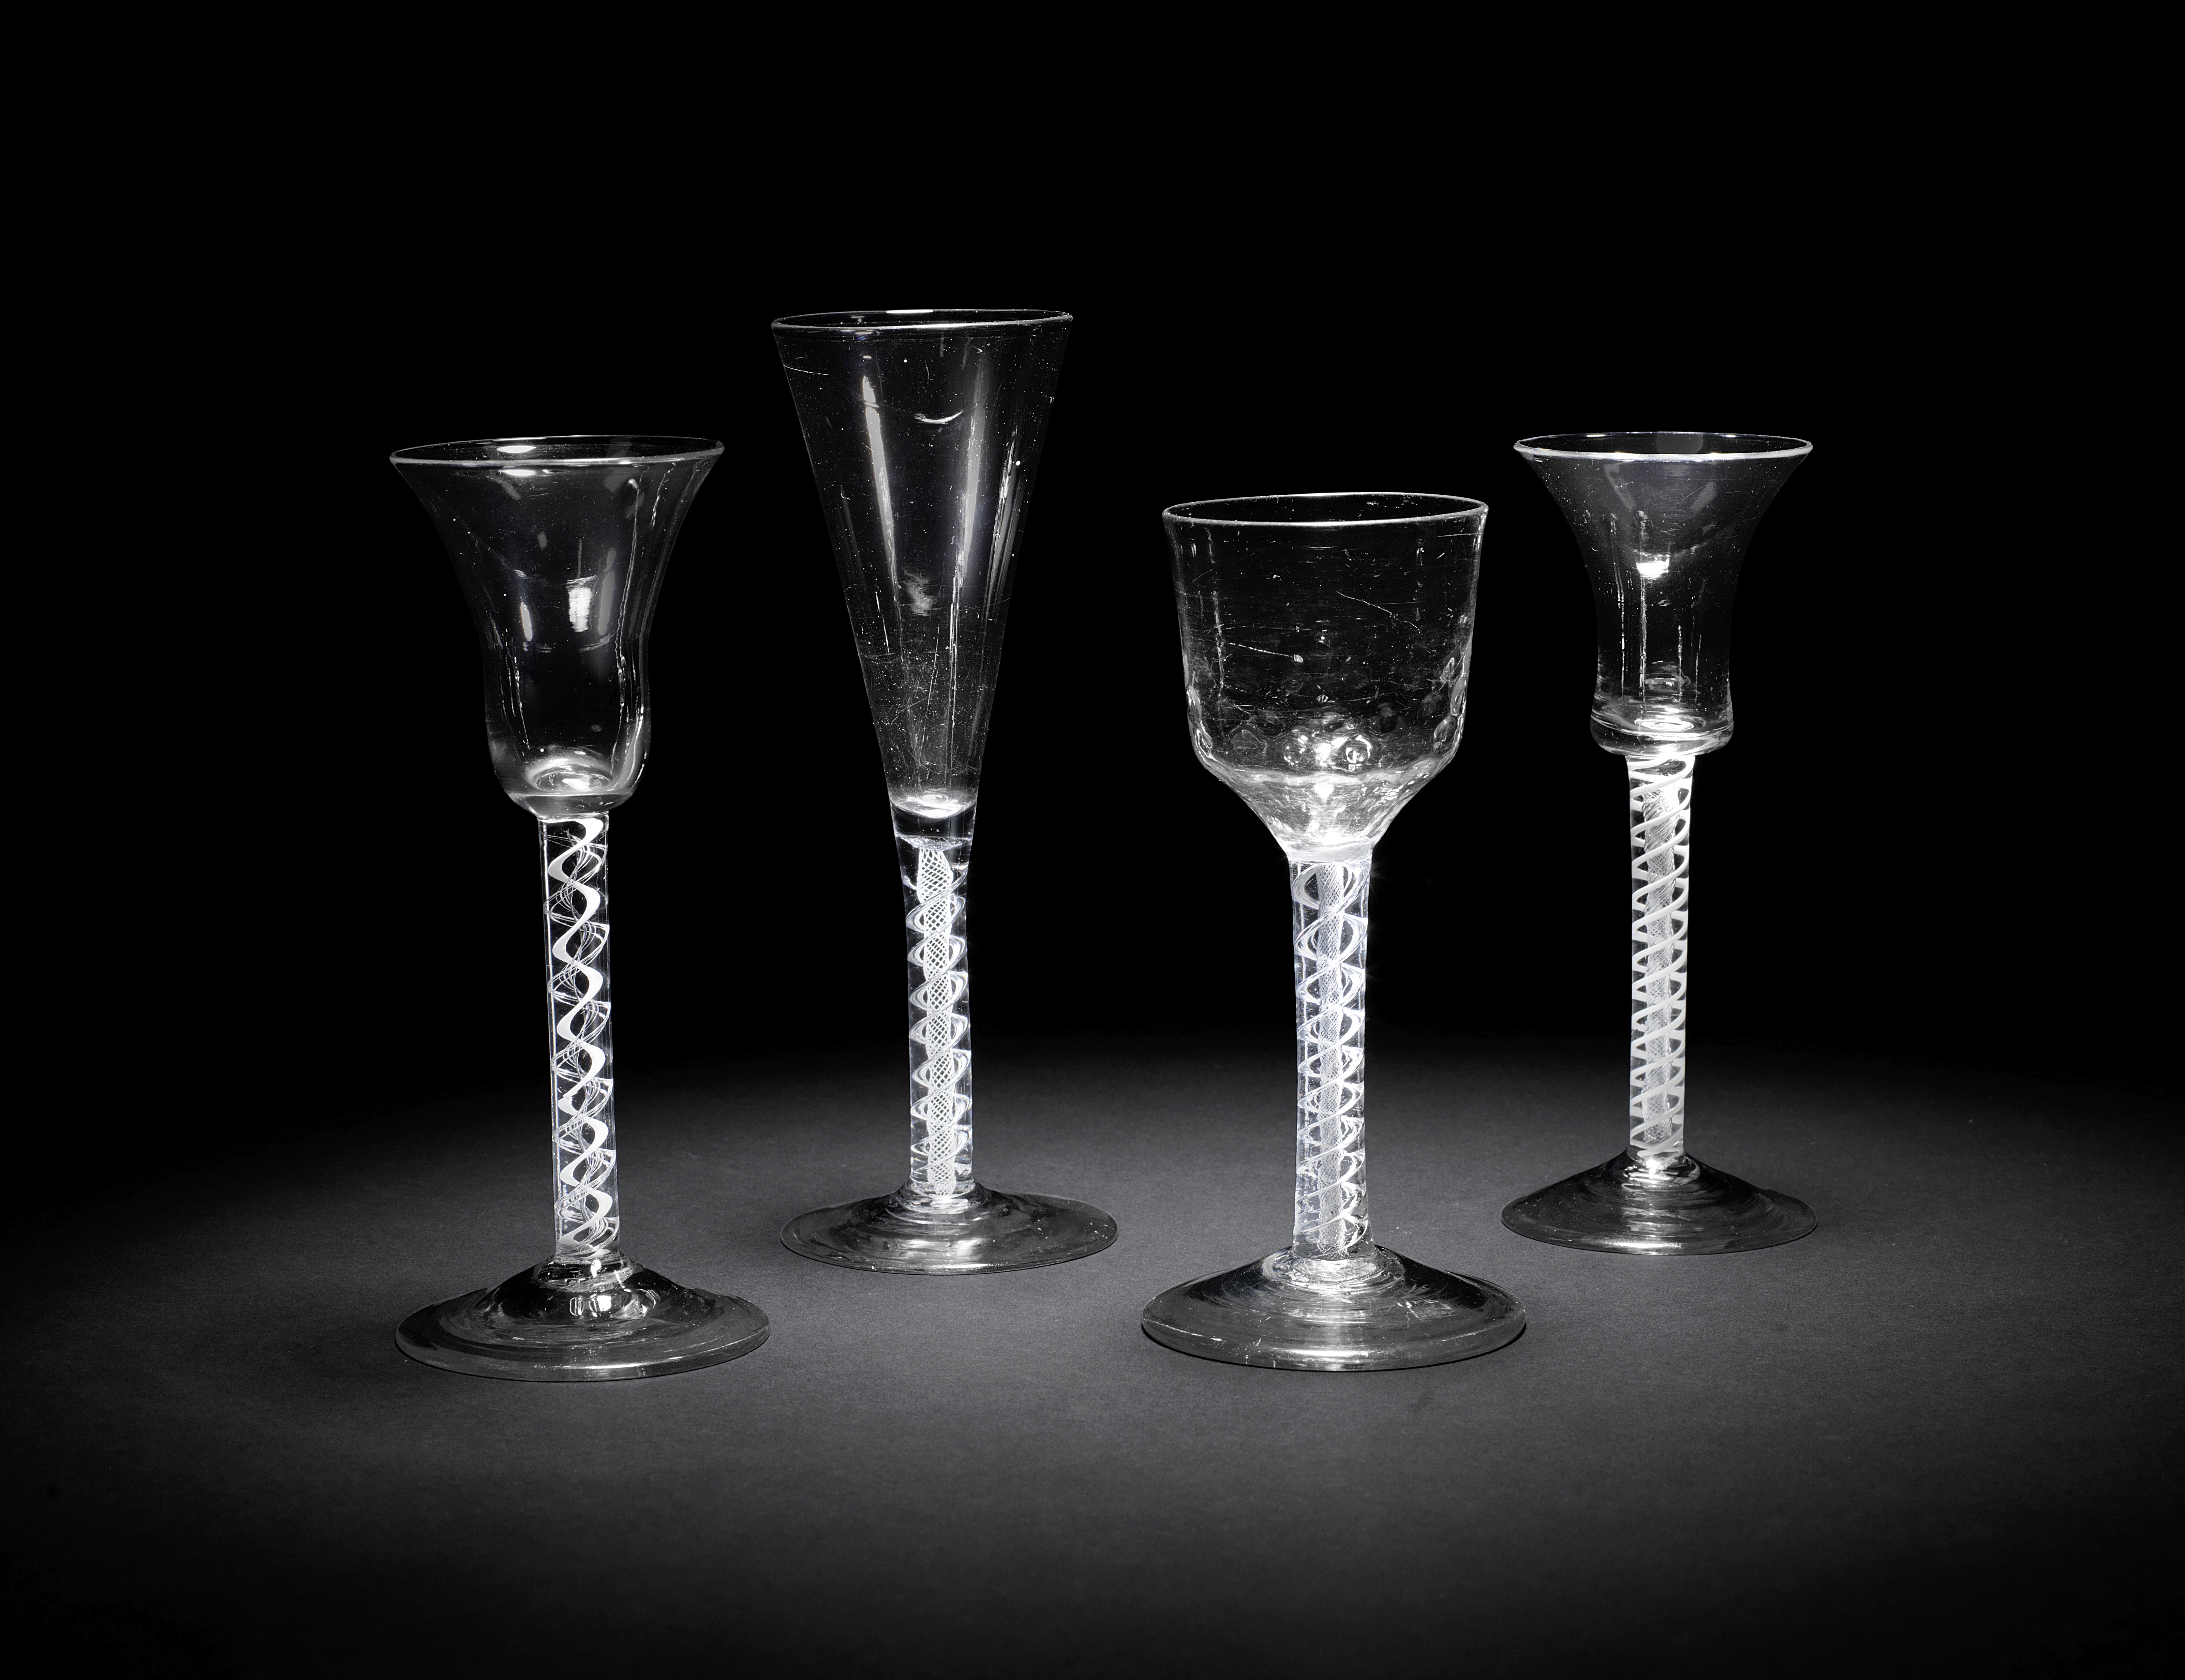 Four wine glasses with twist stems, circa 1750-1760